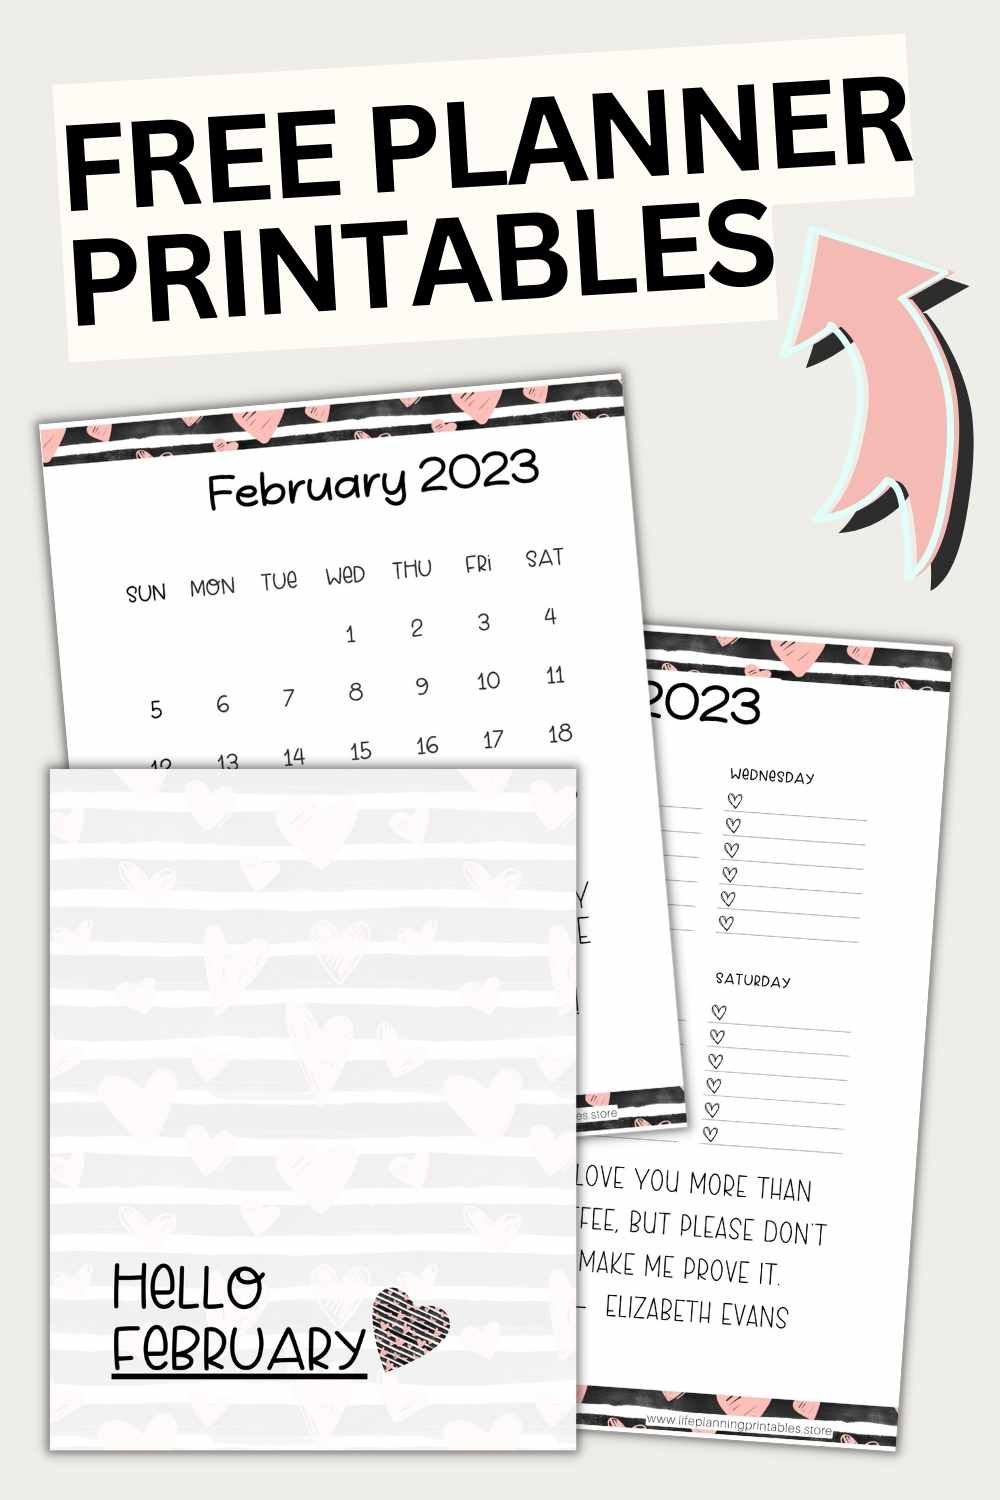 February planner 2023 free printables